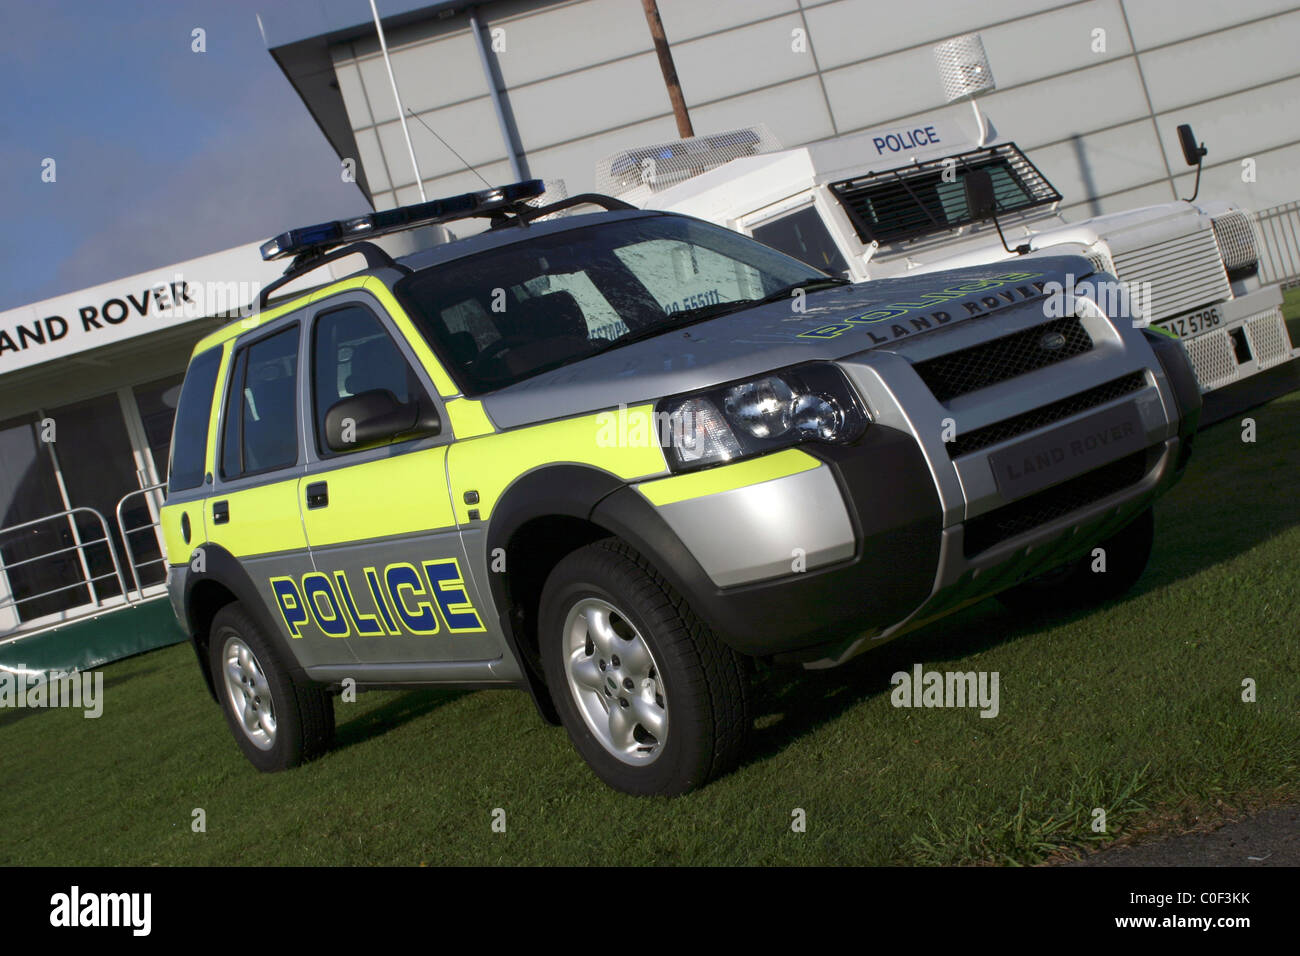 Land Rover Freelander Police demonstrator vehicle Stock Photo